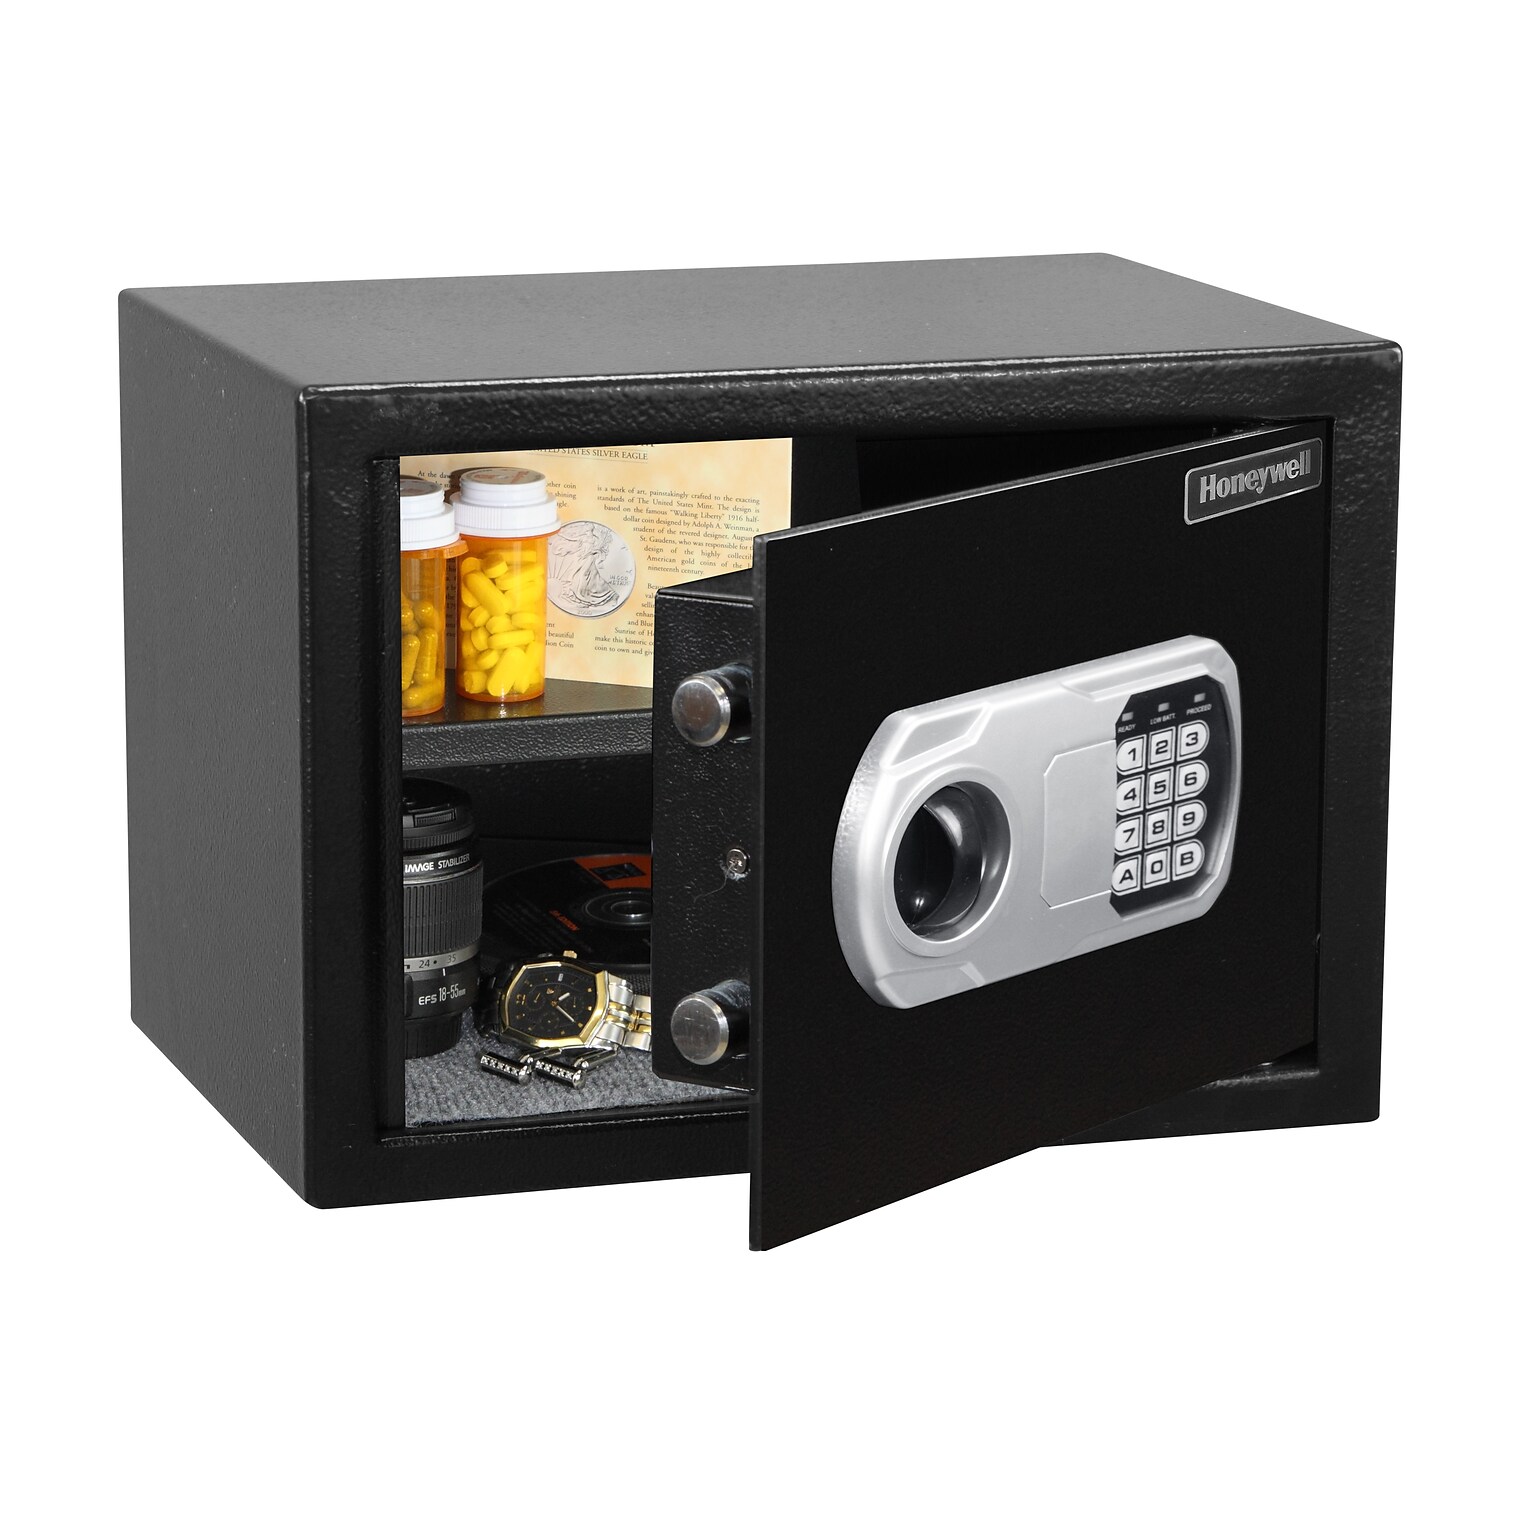 Honeywell Digital Steel Security Safe .60 Cube (5110)